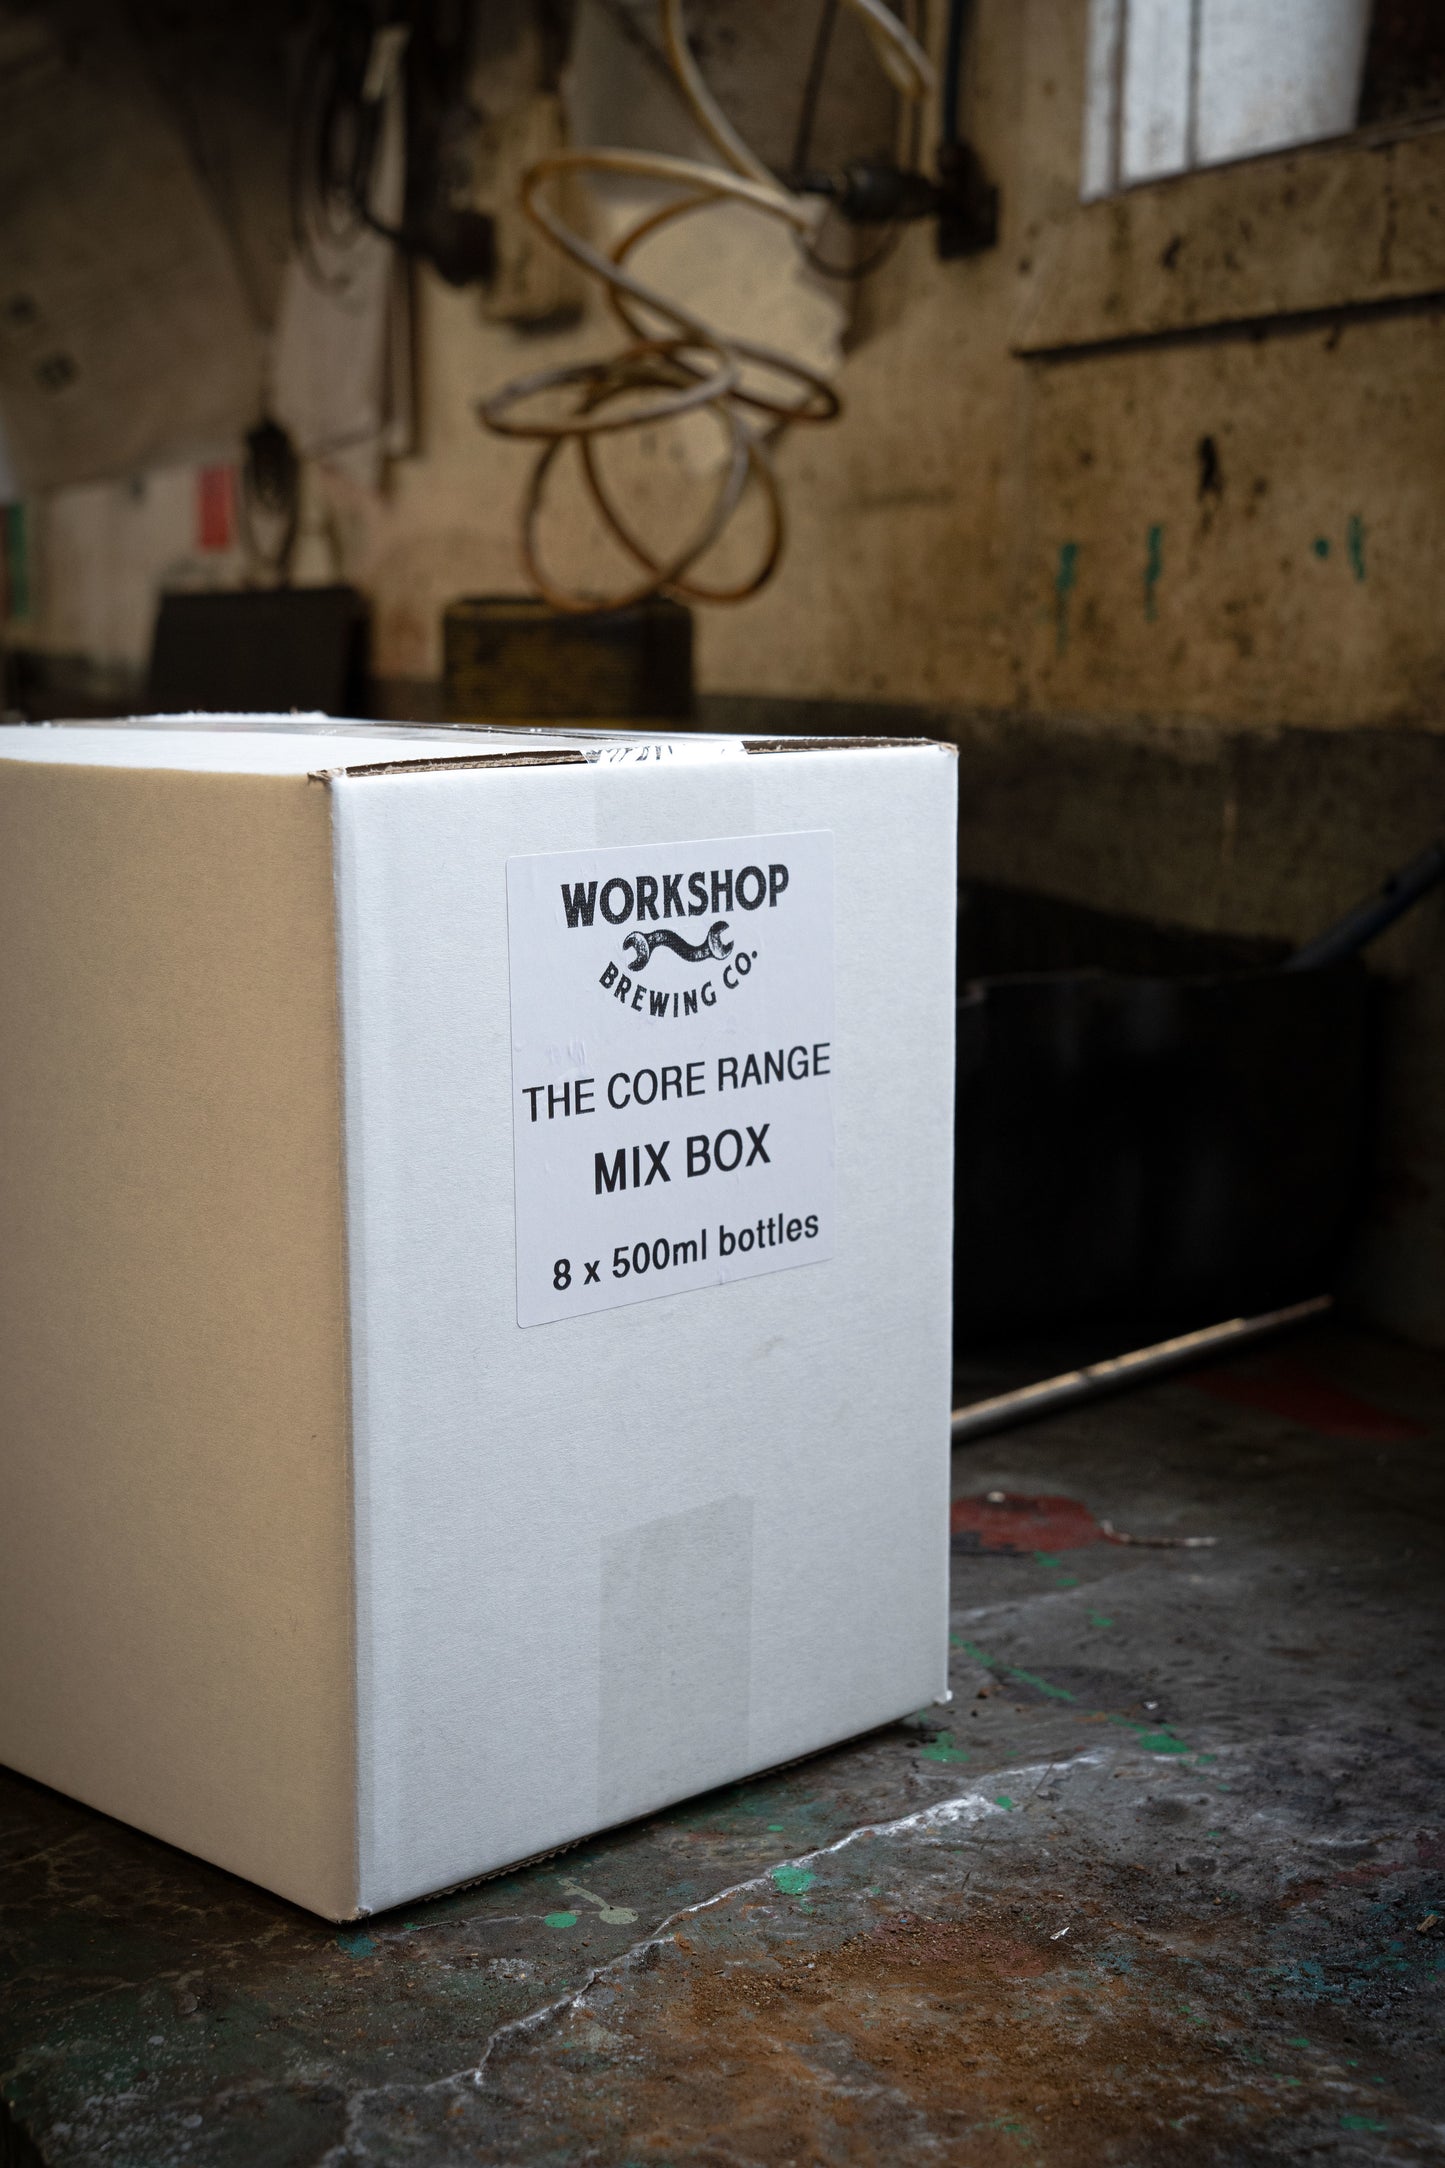 The WORKSHOP Mix Box